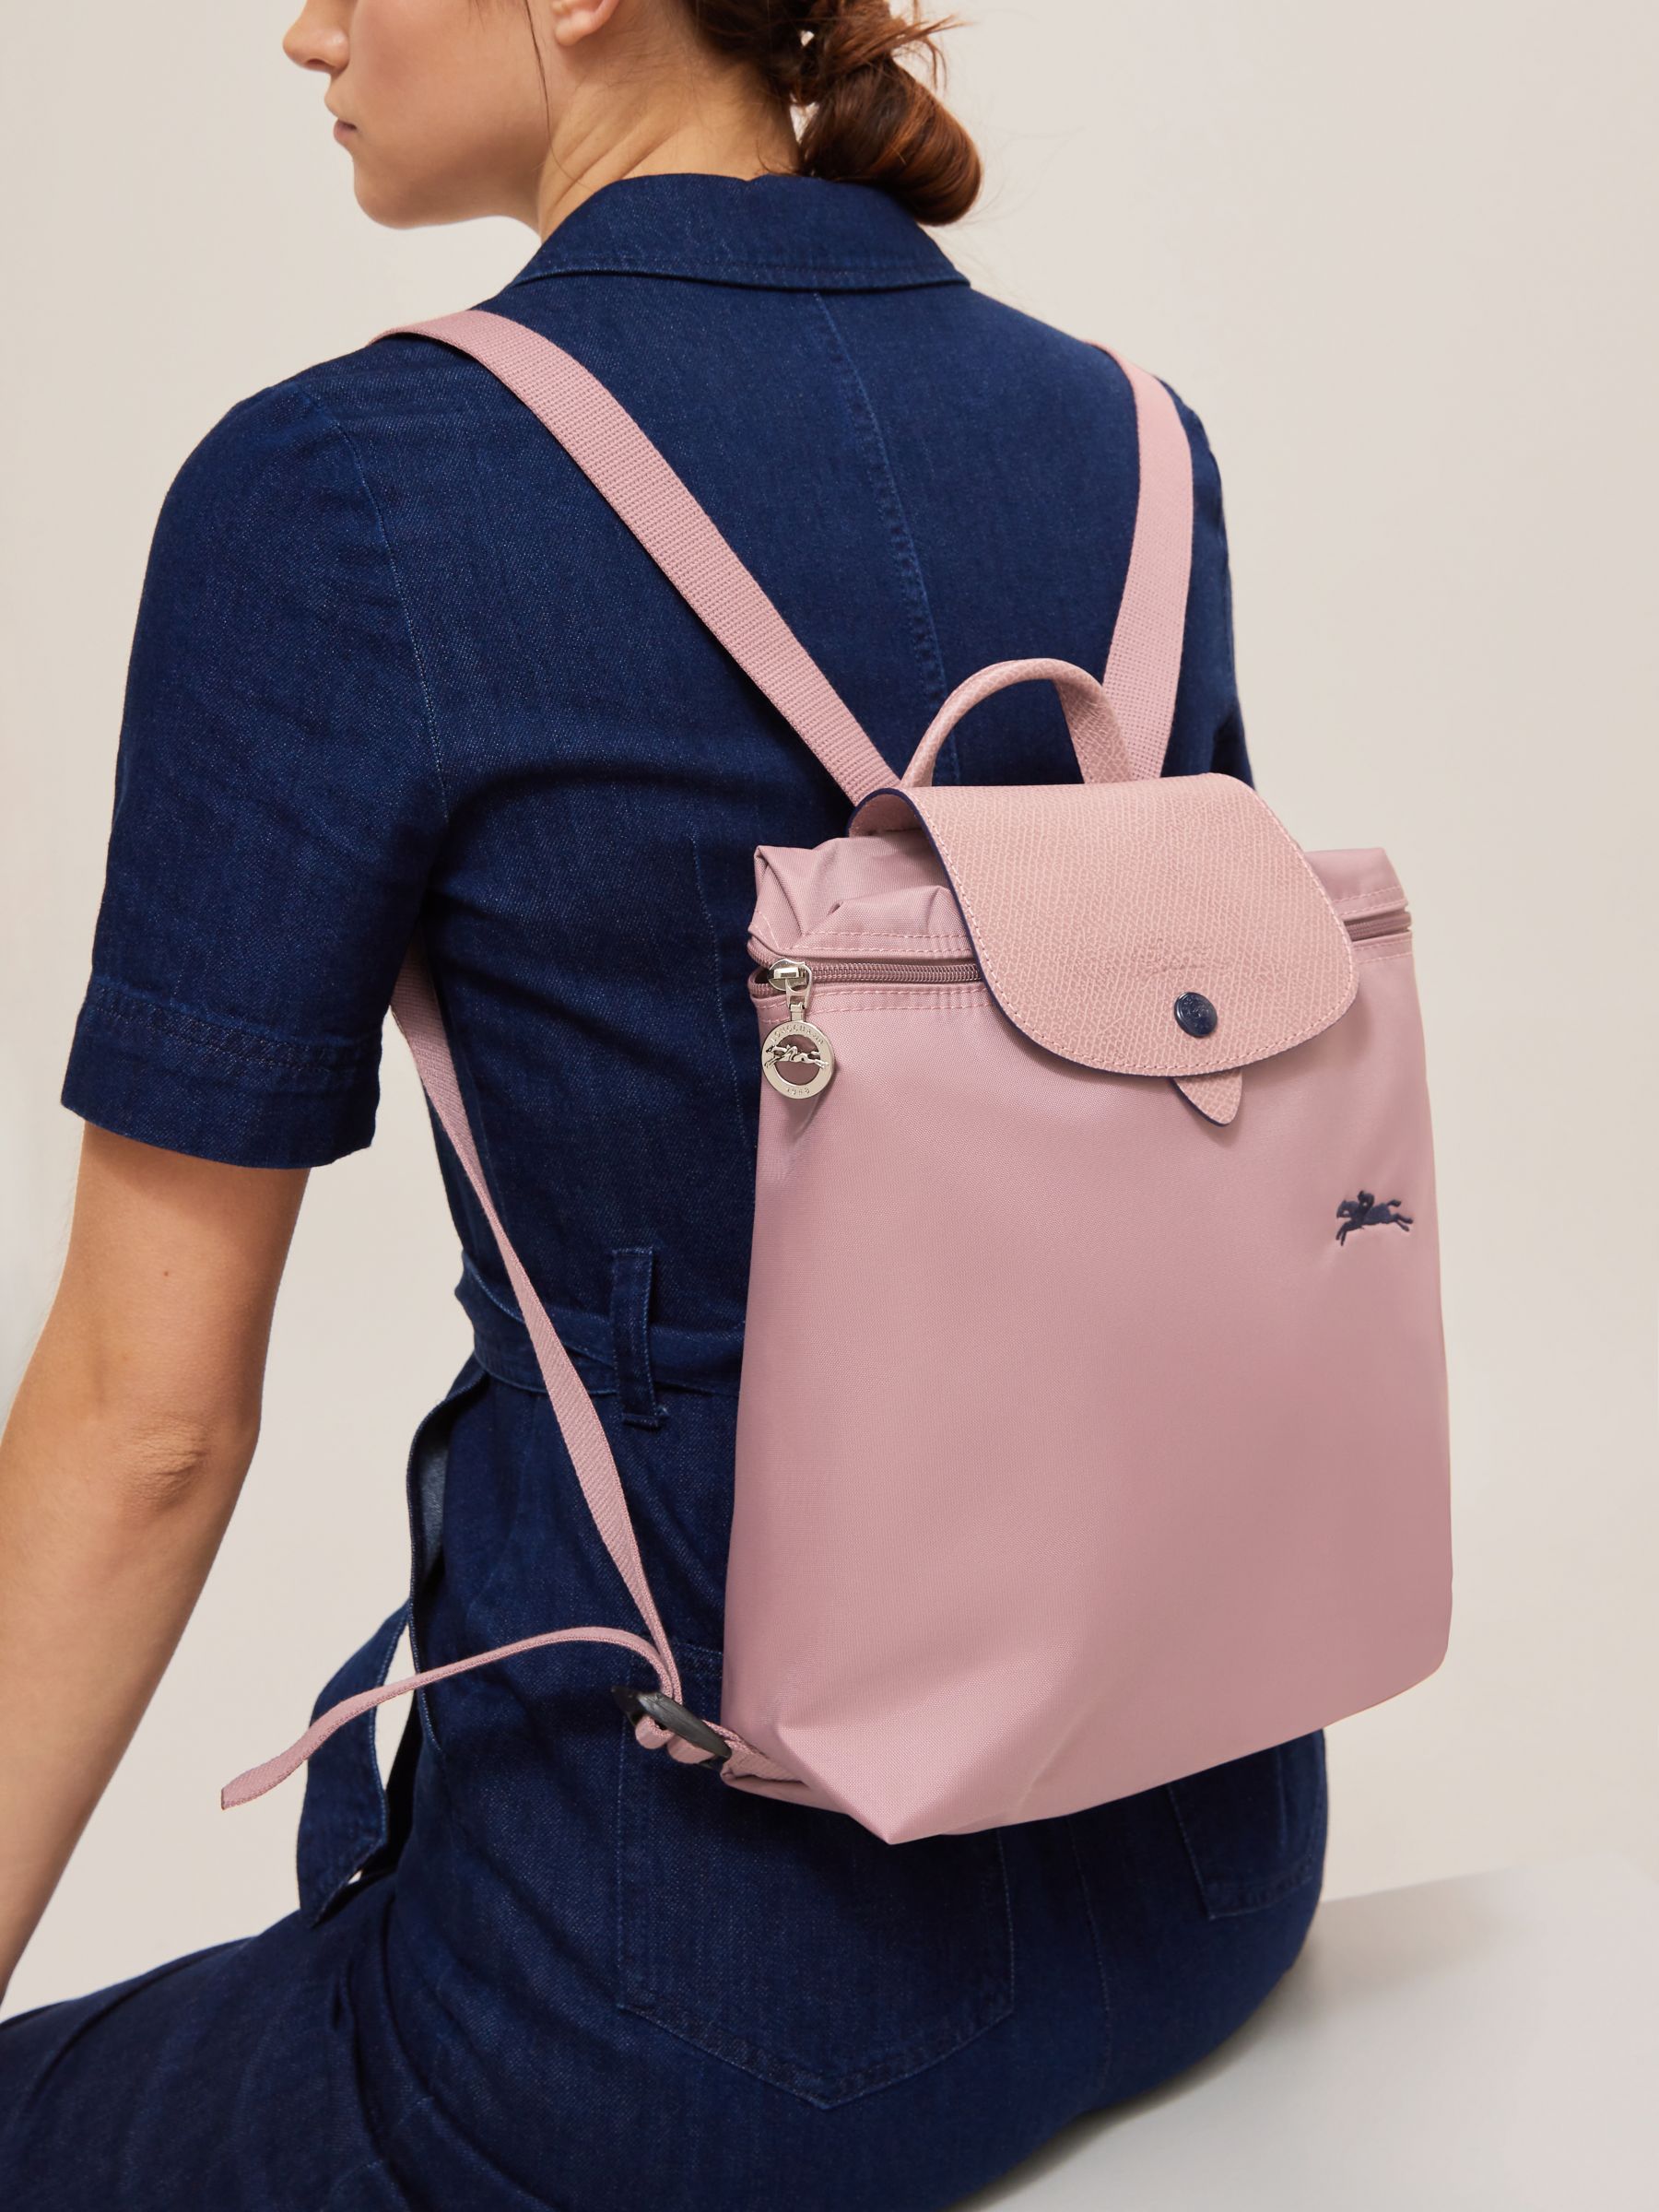 longchamp backpack pink